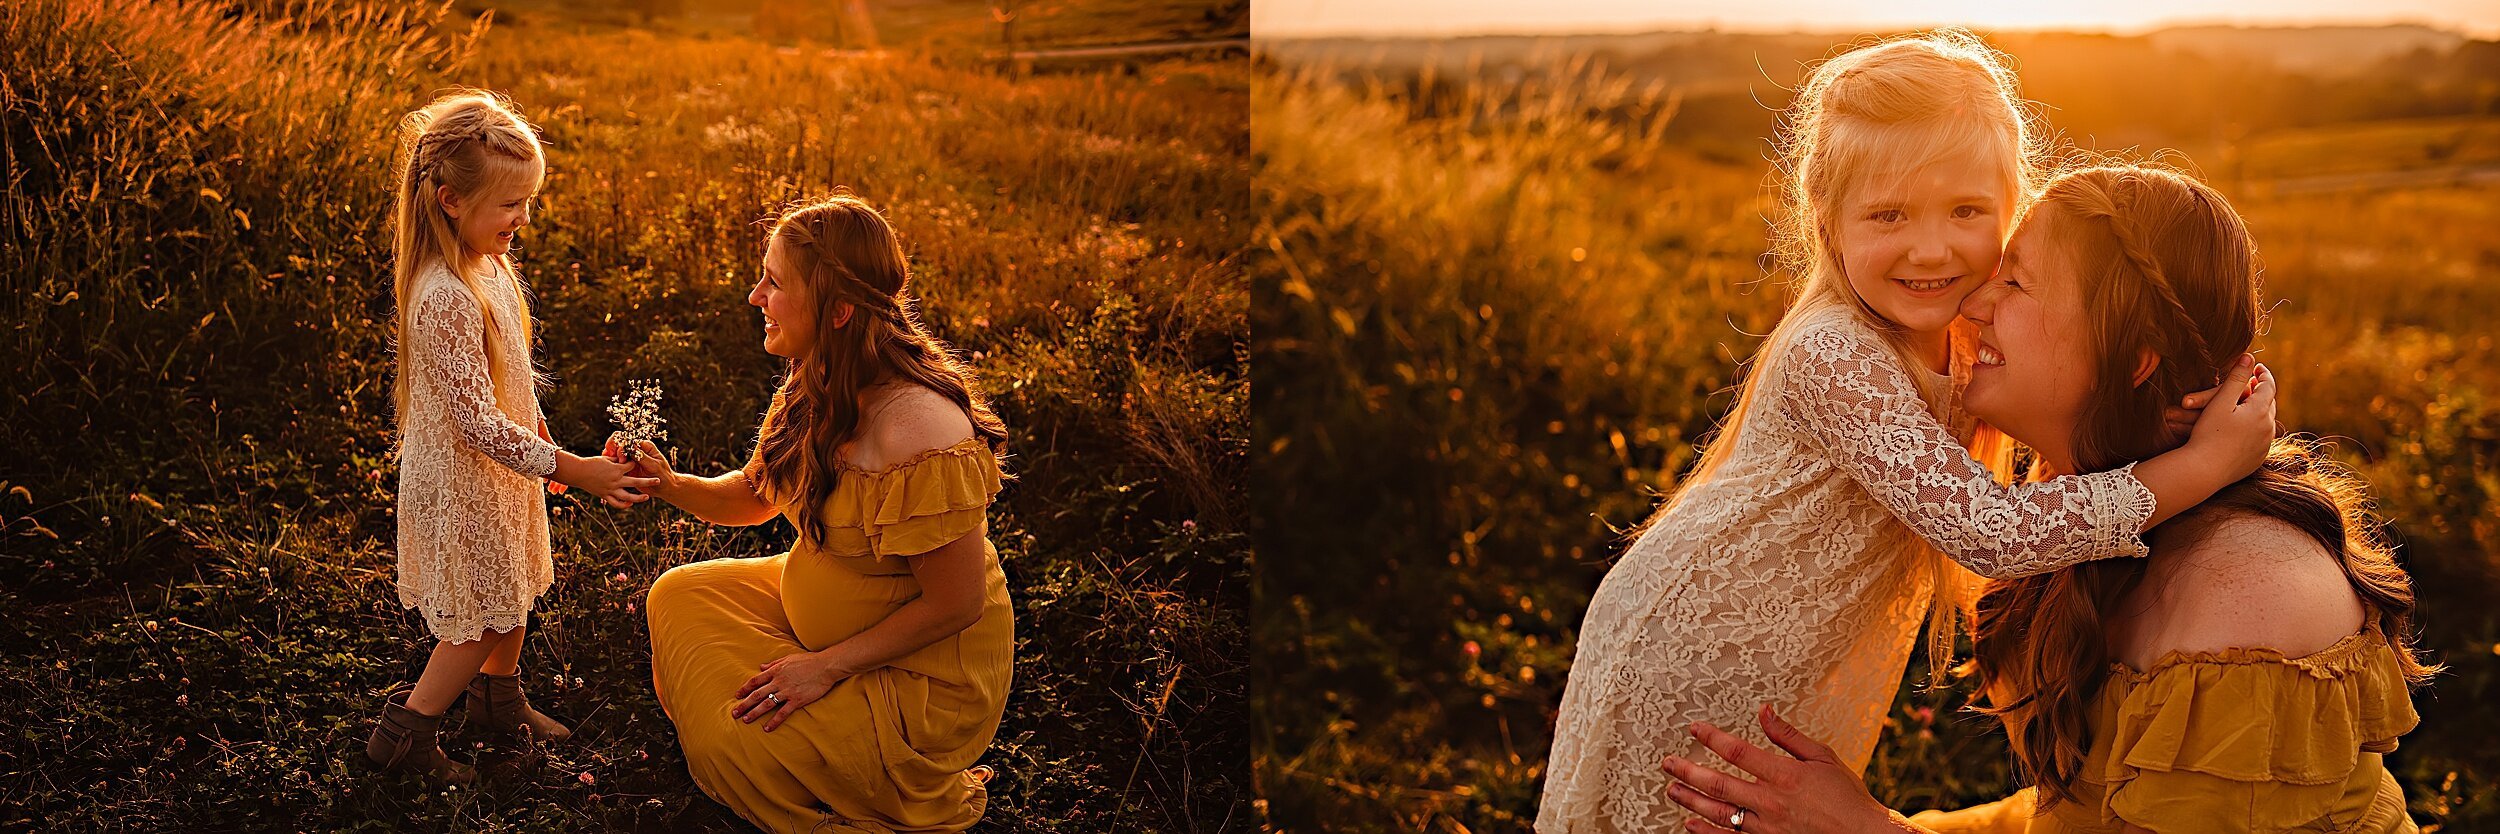 canton-ohio-family-maternity-session-outdoor-sunset-fields-lauren-grayson-photography_0115.jpeg